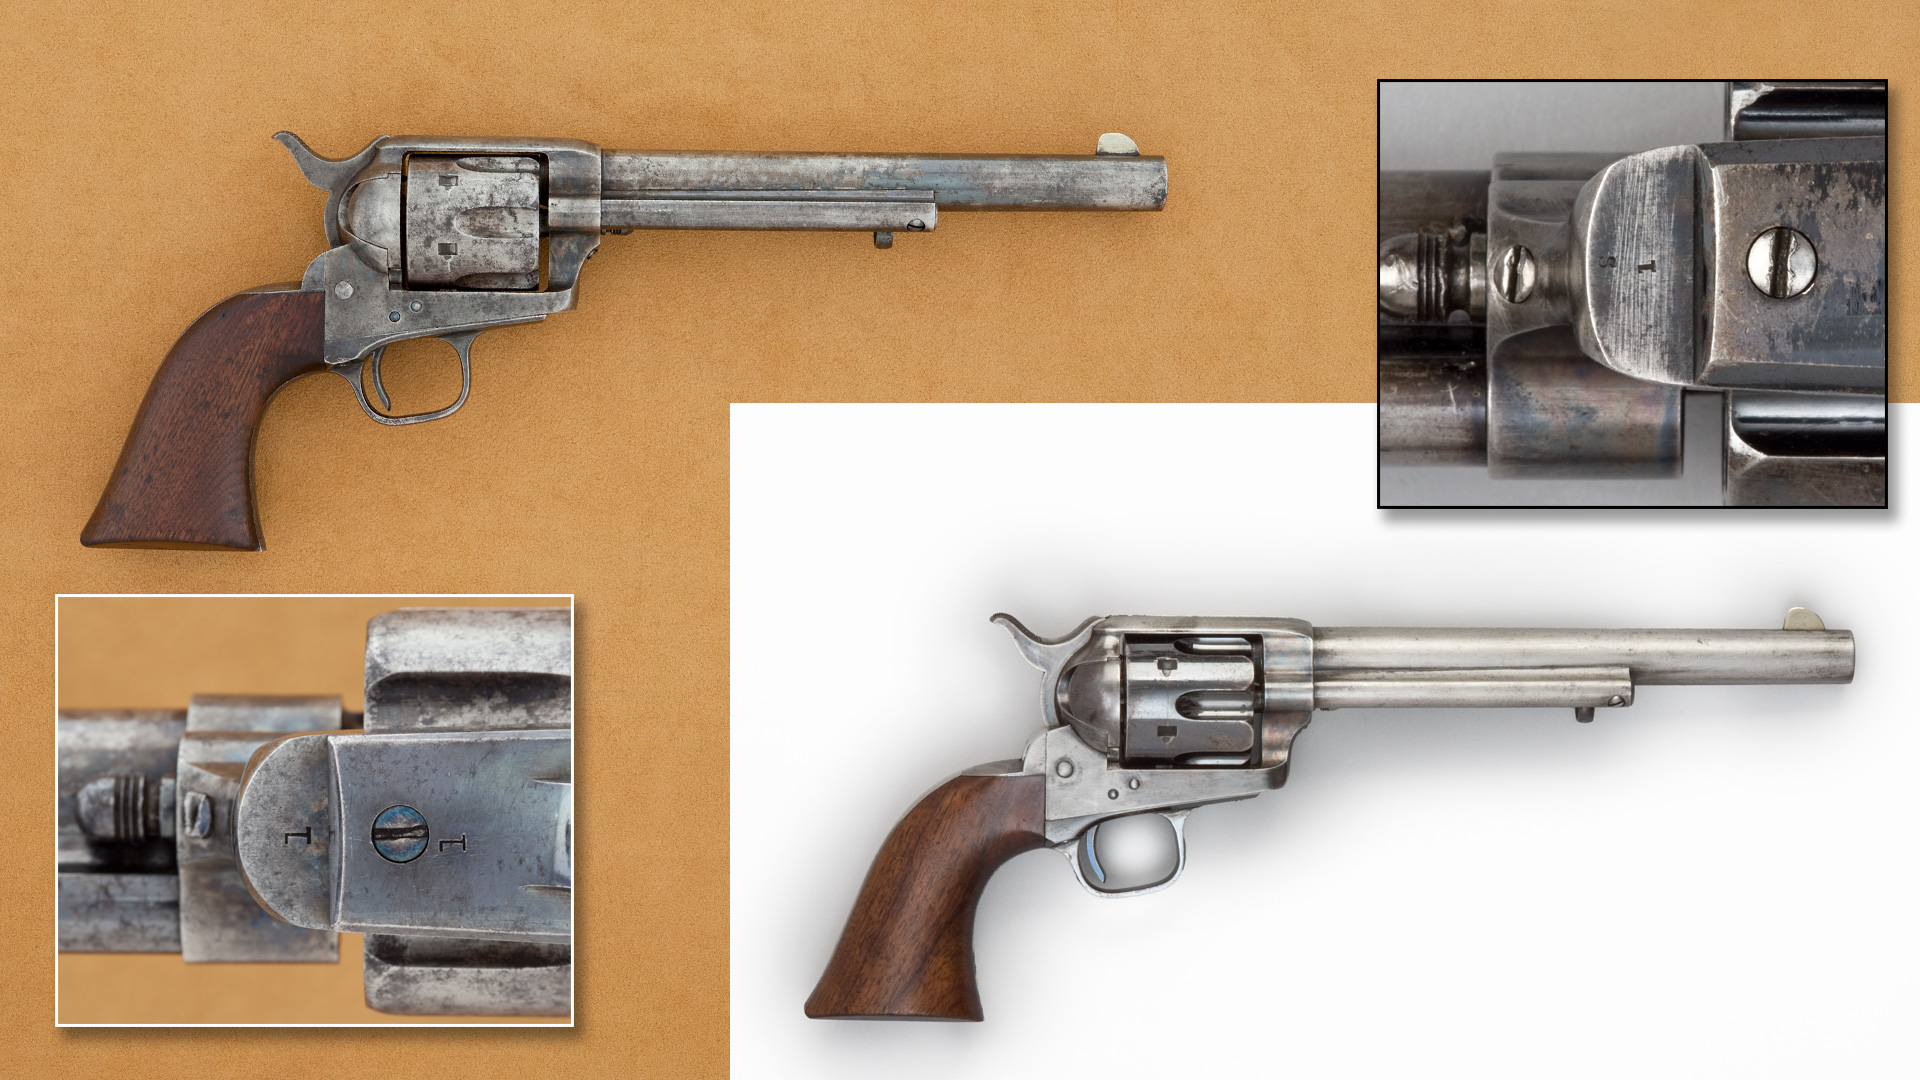 Cal.45 cavalry revolver, USA 1873 - Revolvers - Western and